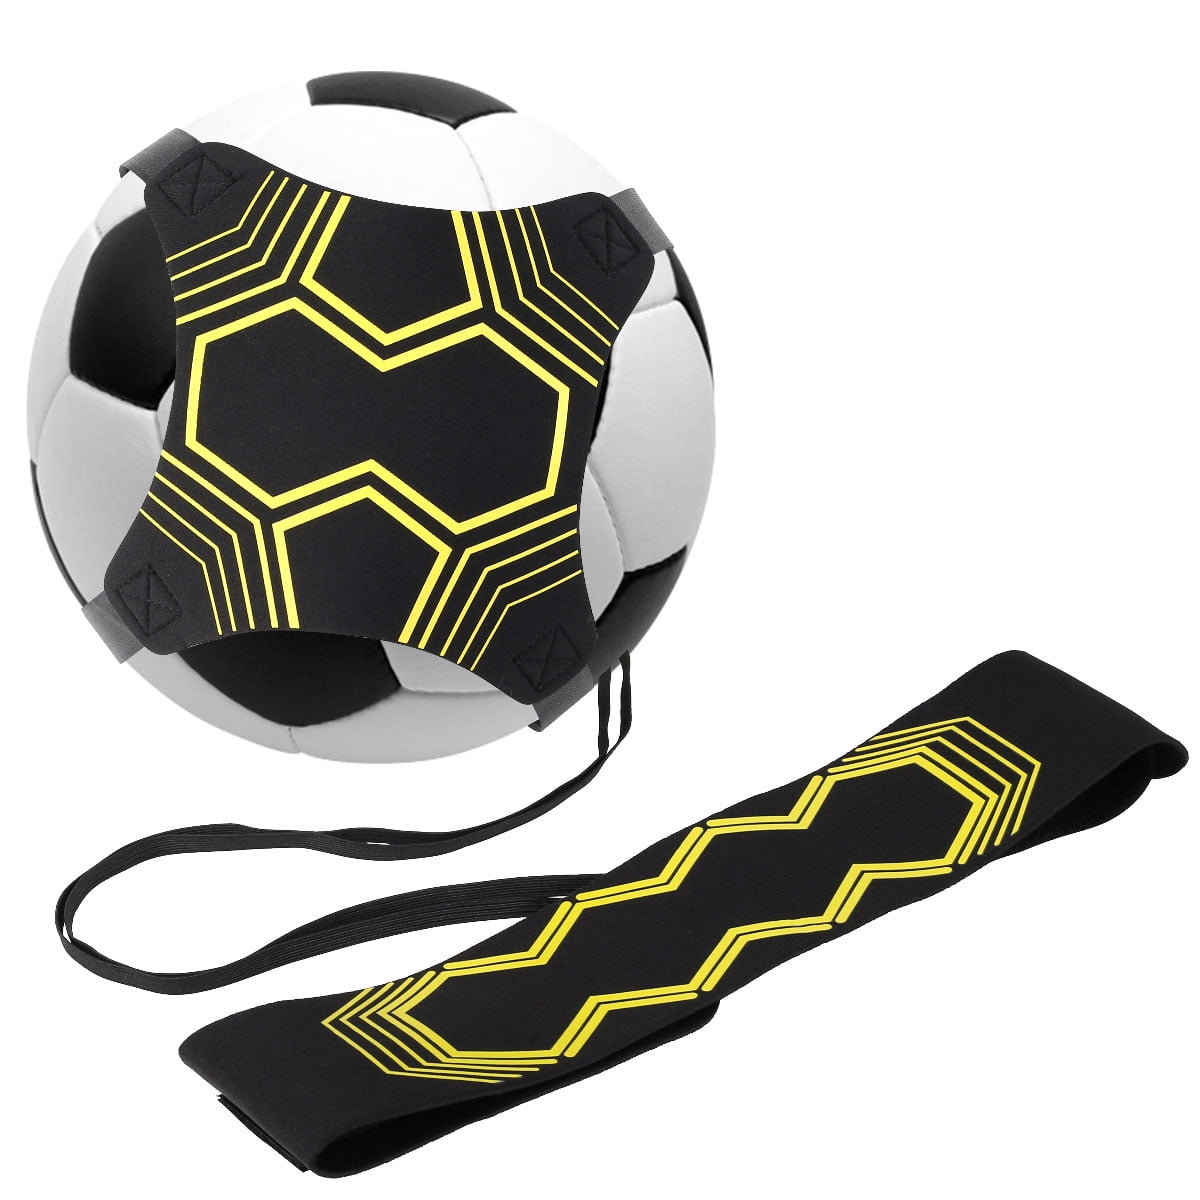 Adjustable Football Kick Trainer Solo Soccer Practice Training Aid Elastic Belt 